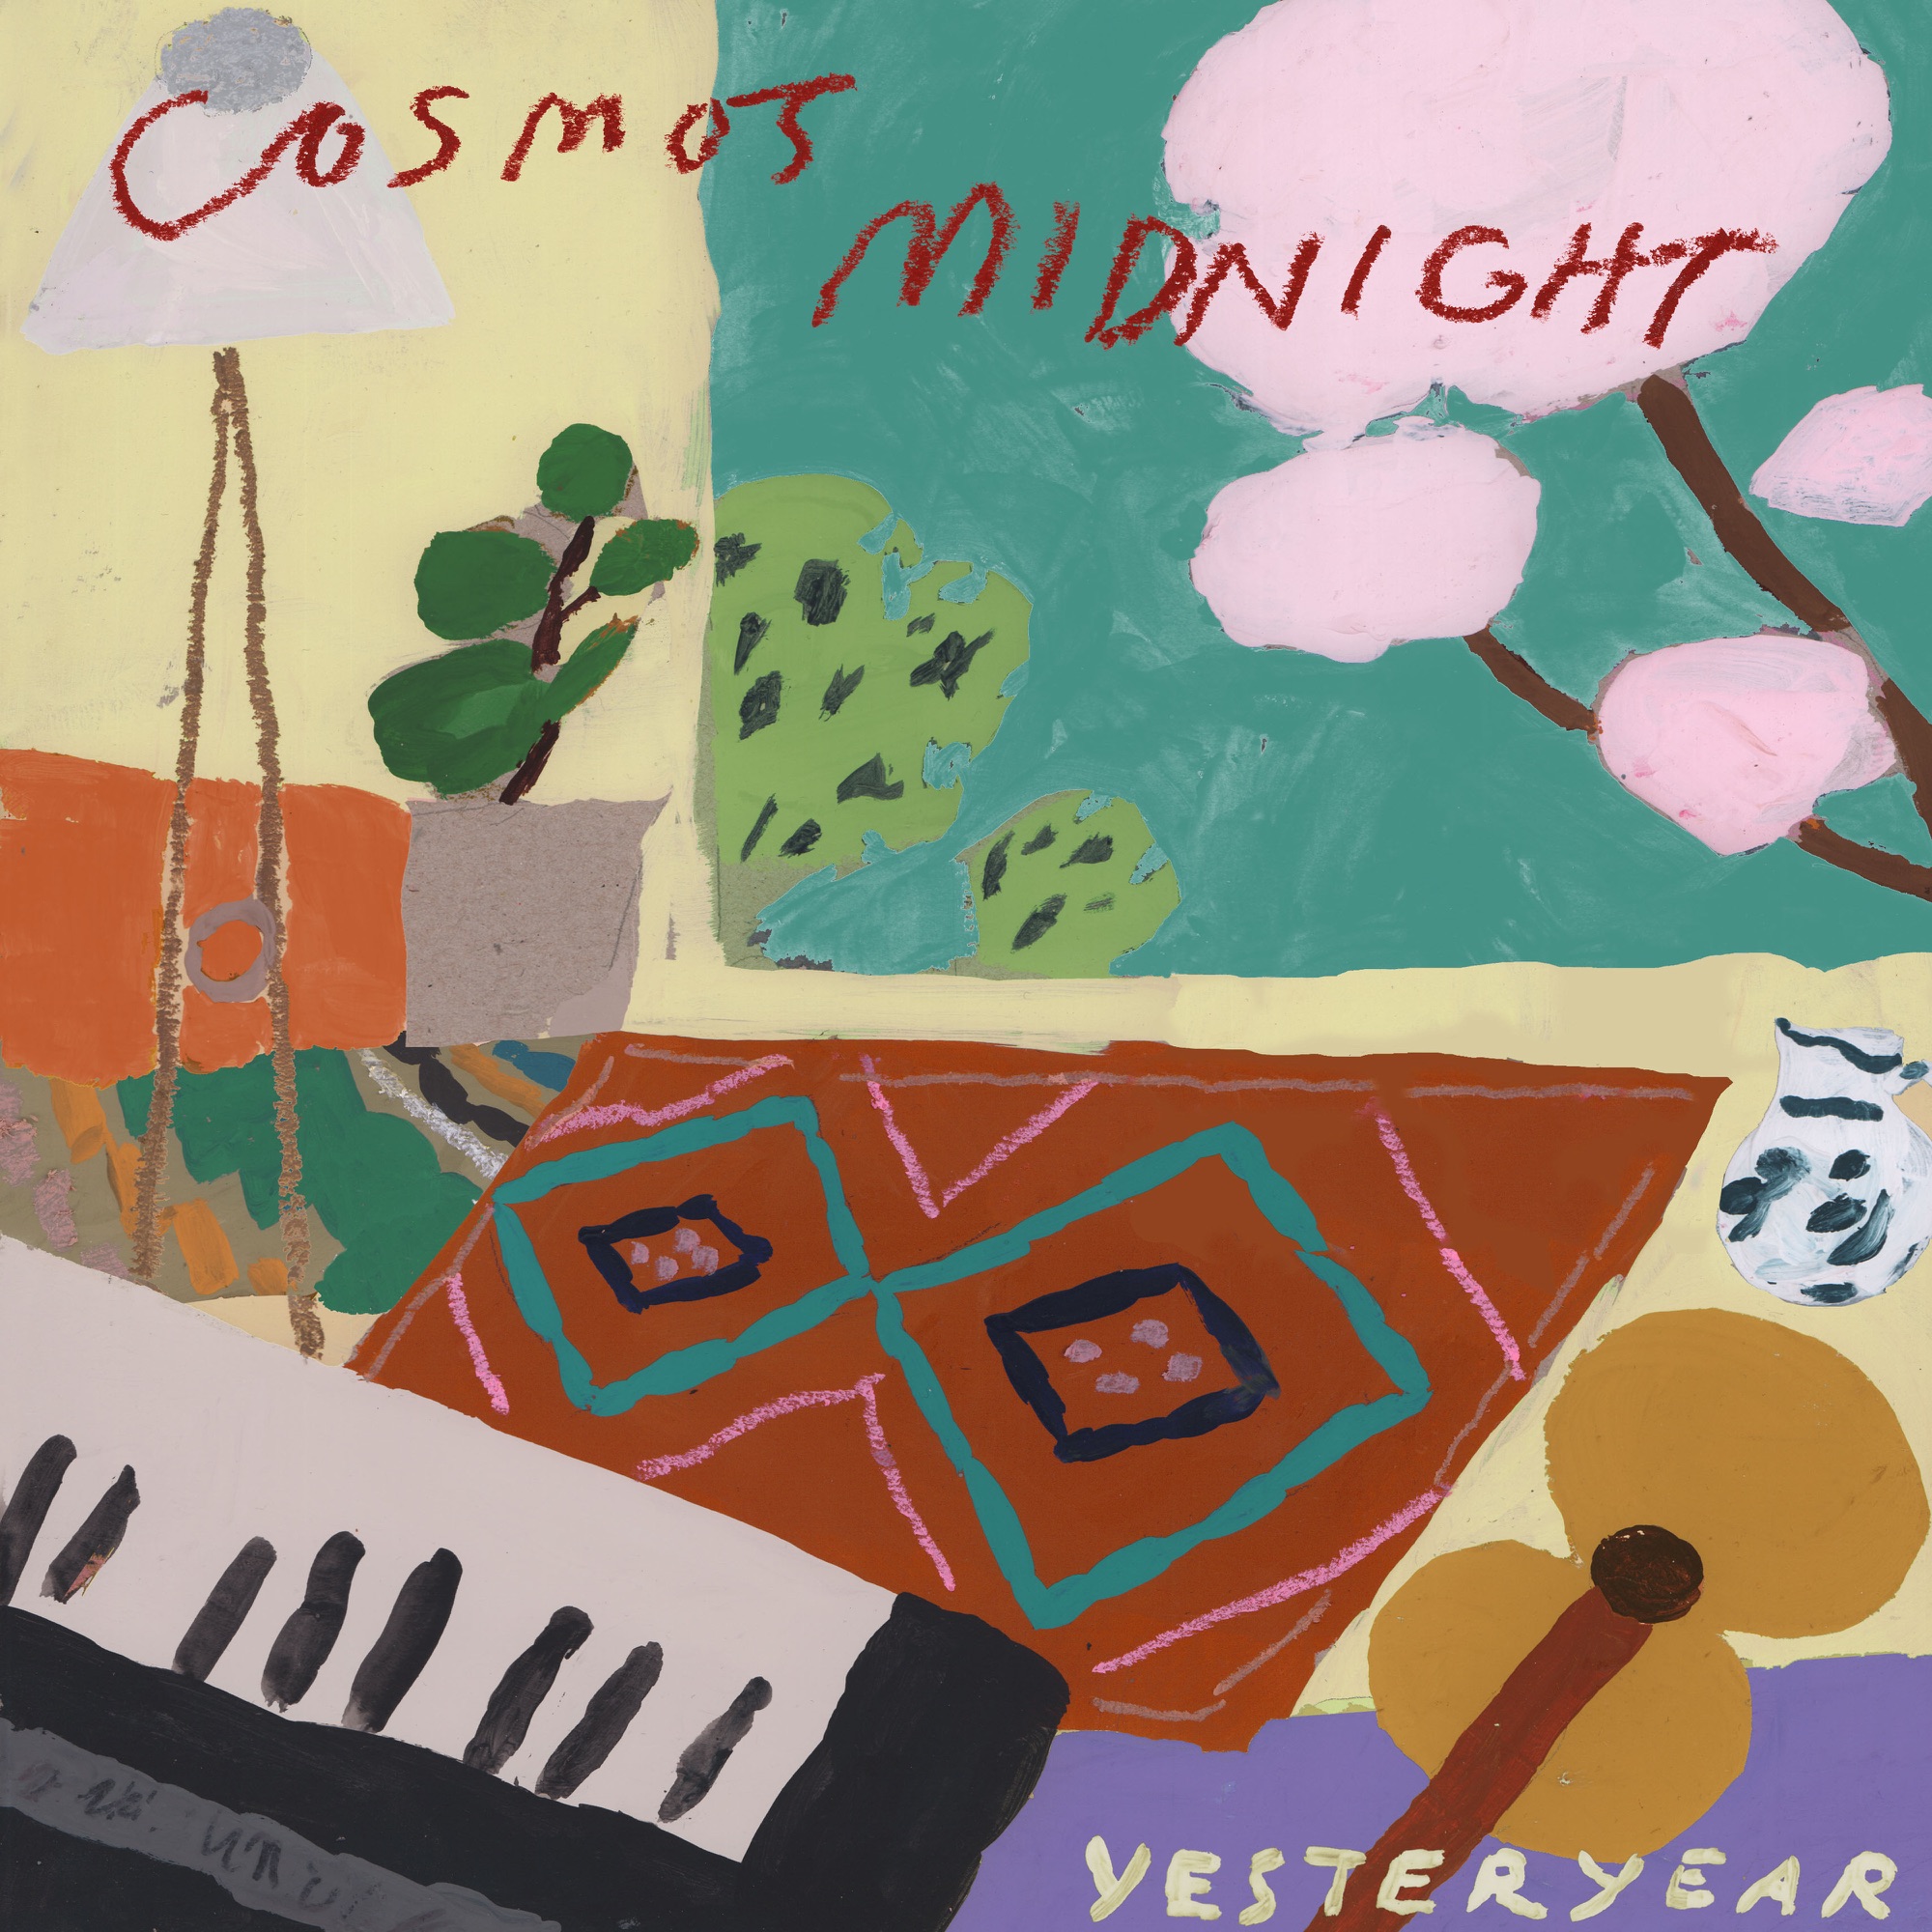 Cosmo's Midnight - Yesteryear